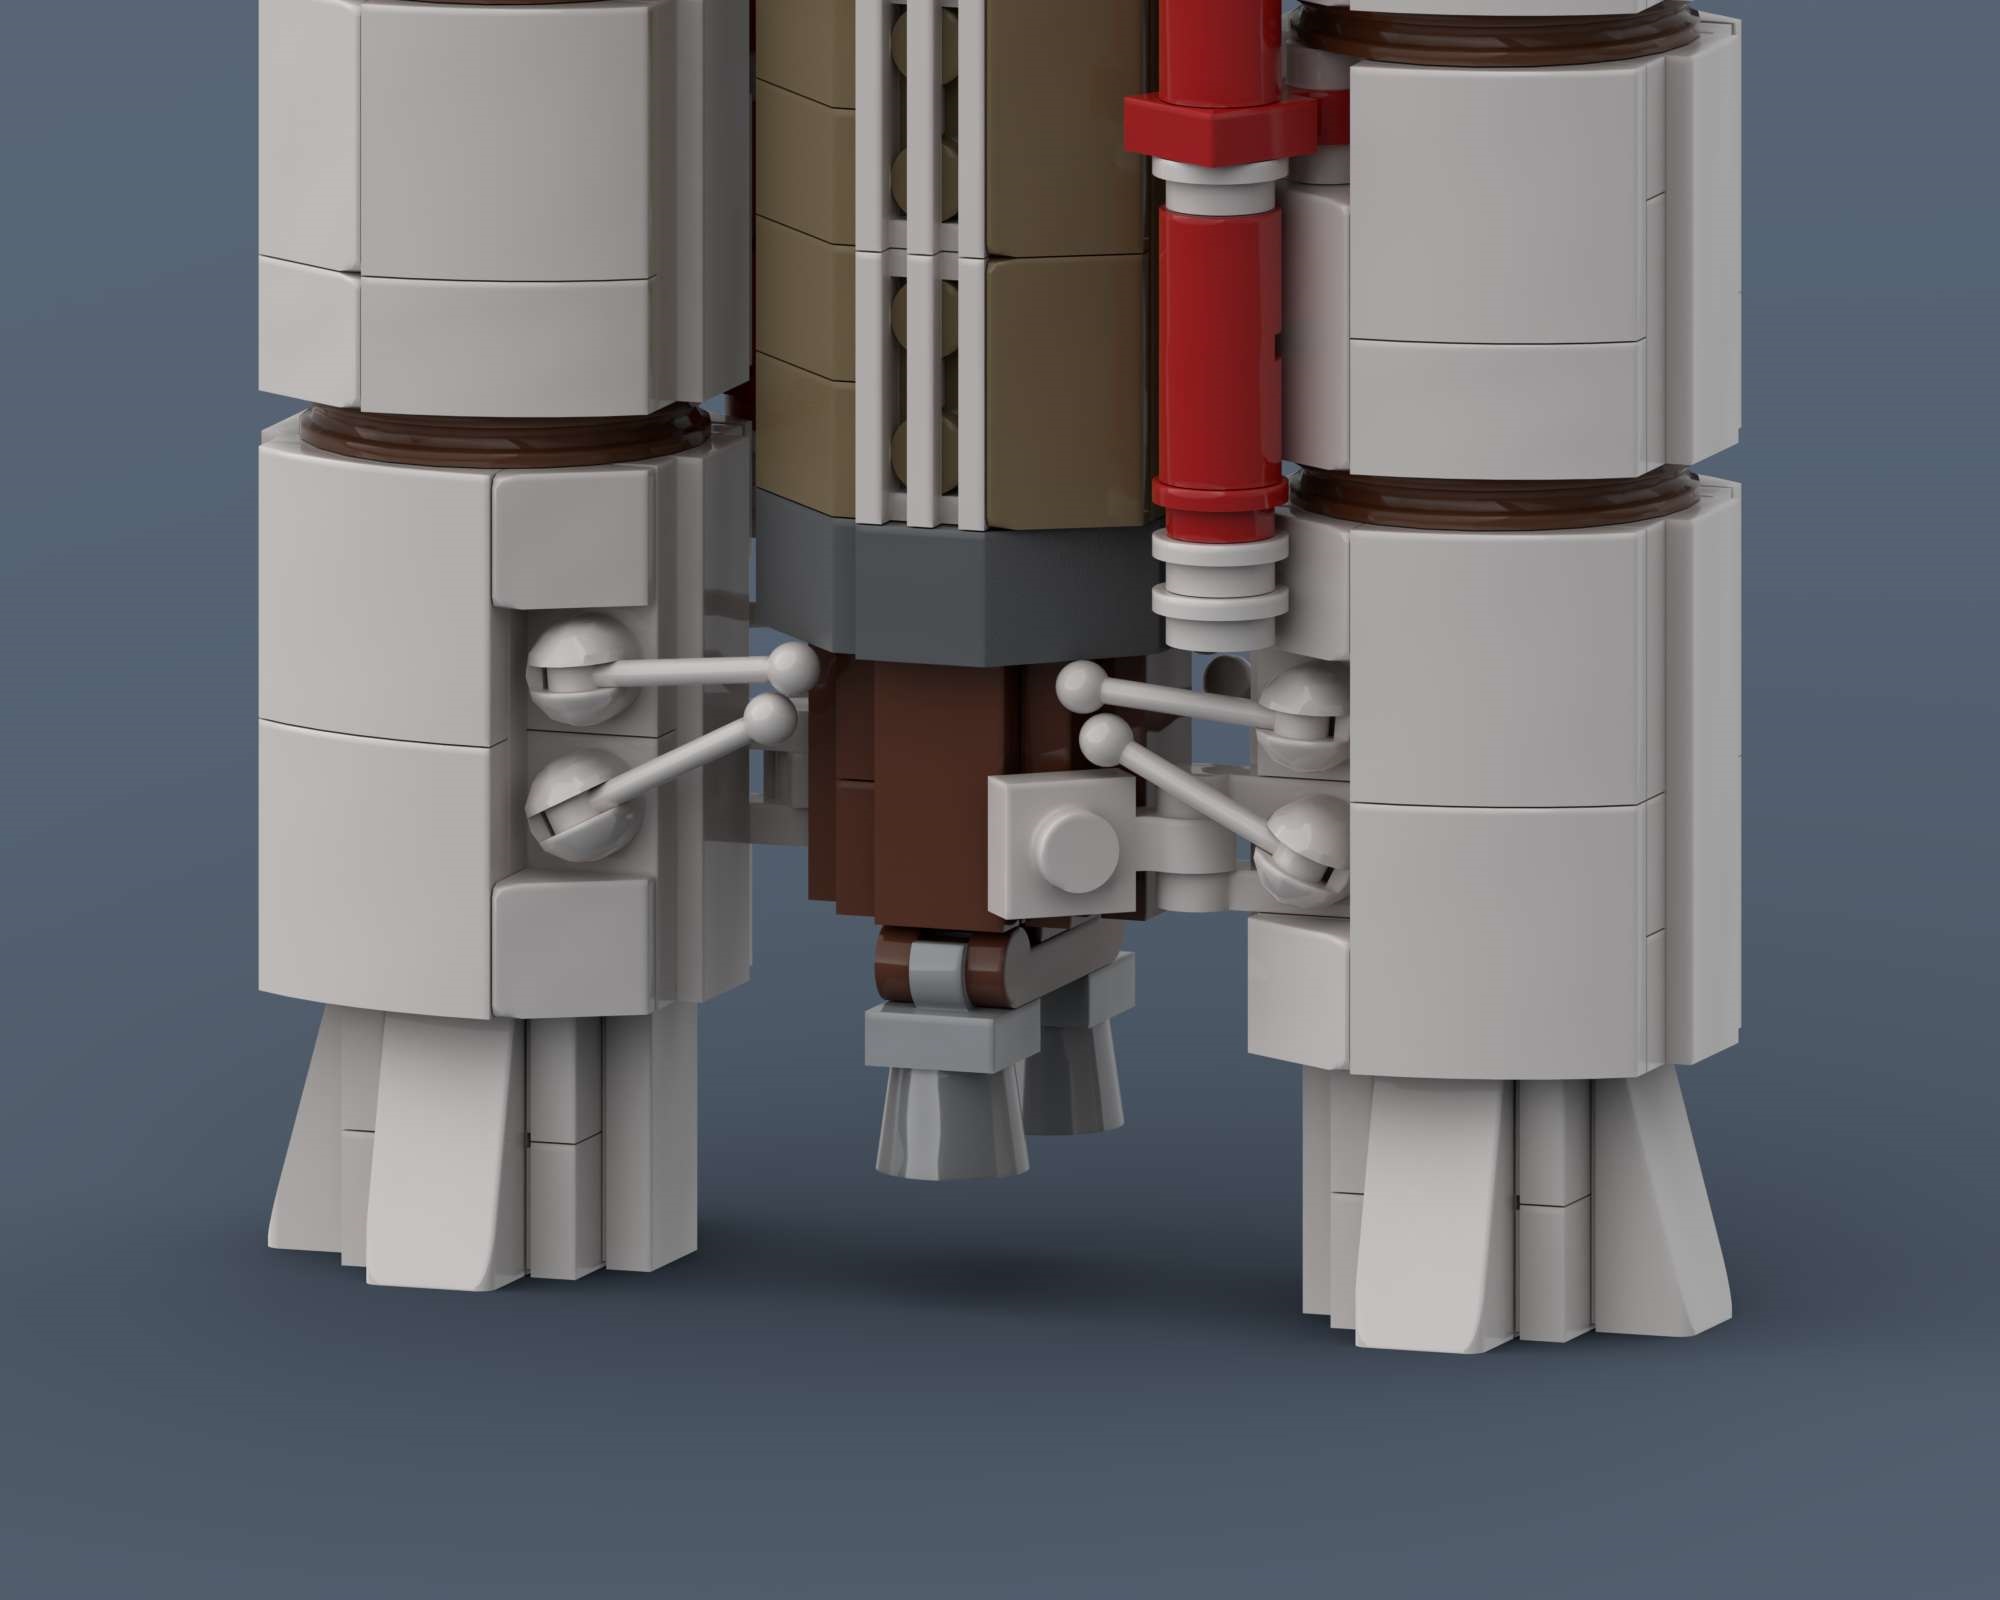 Titan III Commercial Mars Observer